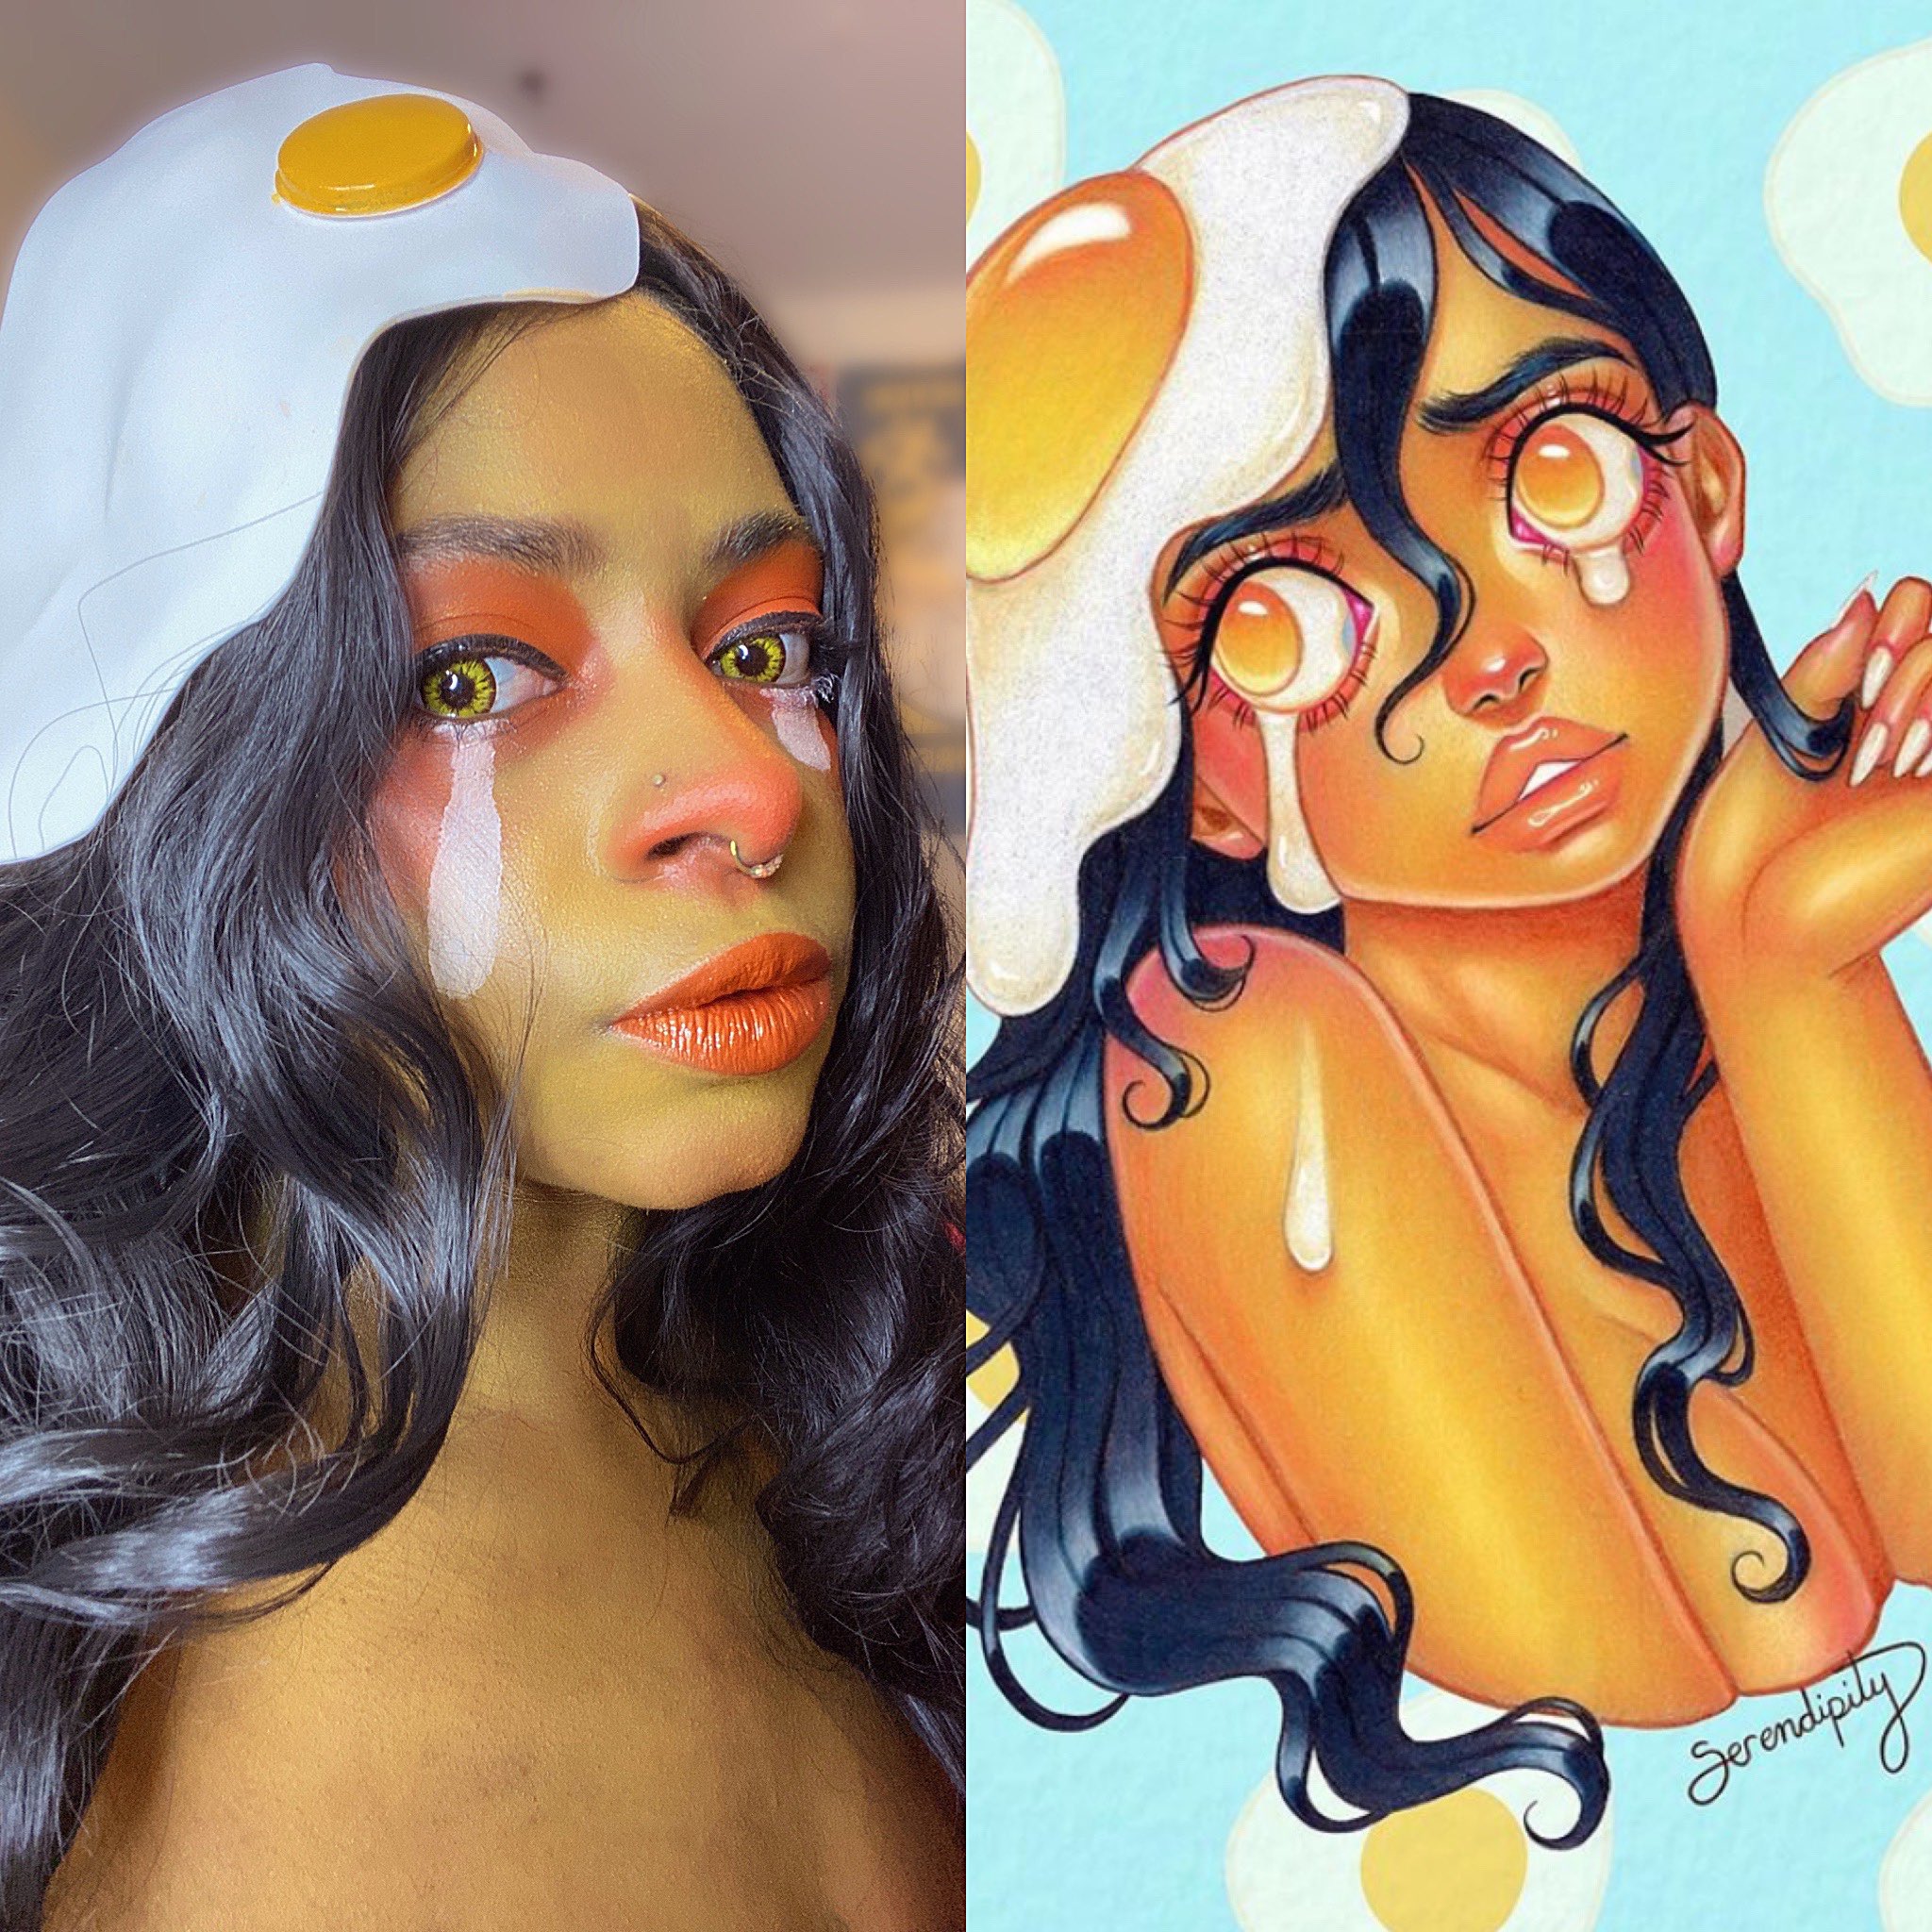 DeLa Doll's Egg Girl Cosplay inspired by Serendipity The Artist's Egg Girl Character